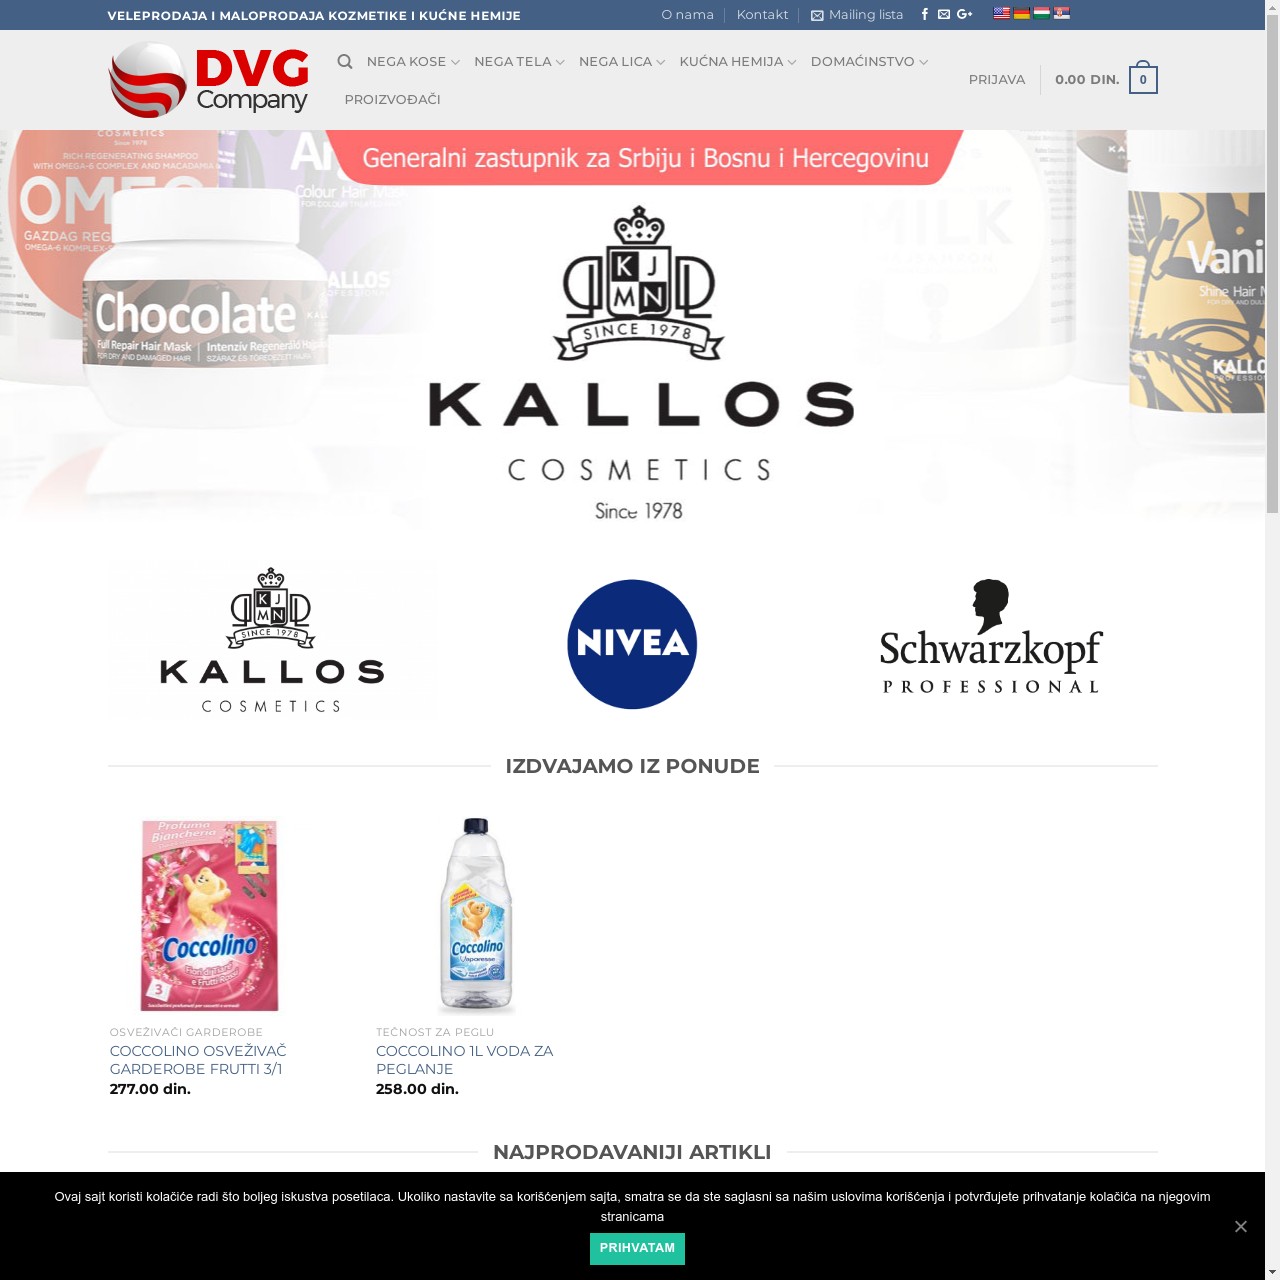 DVG Company – Veleprodaja i maloprodaja kozmetike i kućne hemije